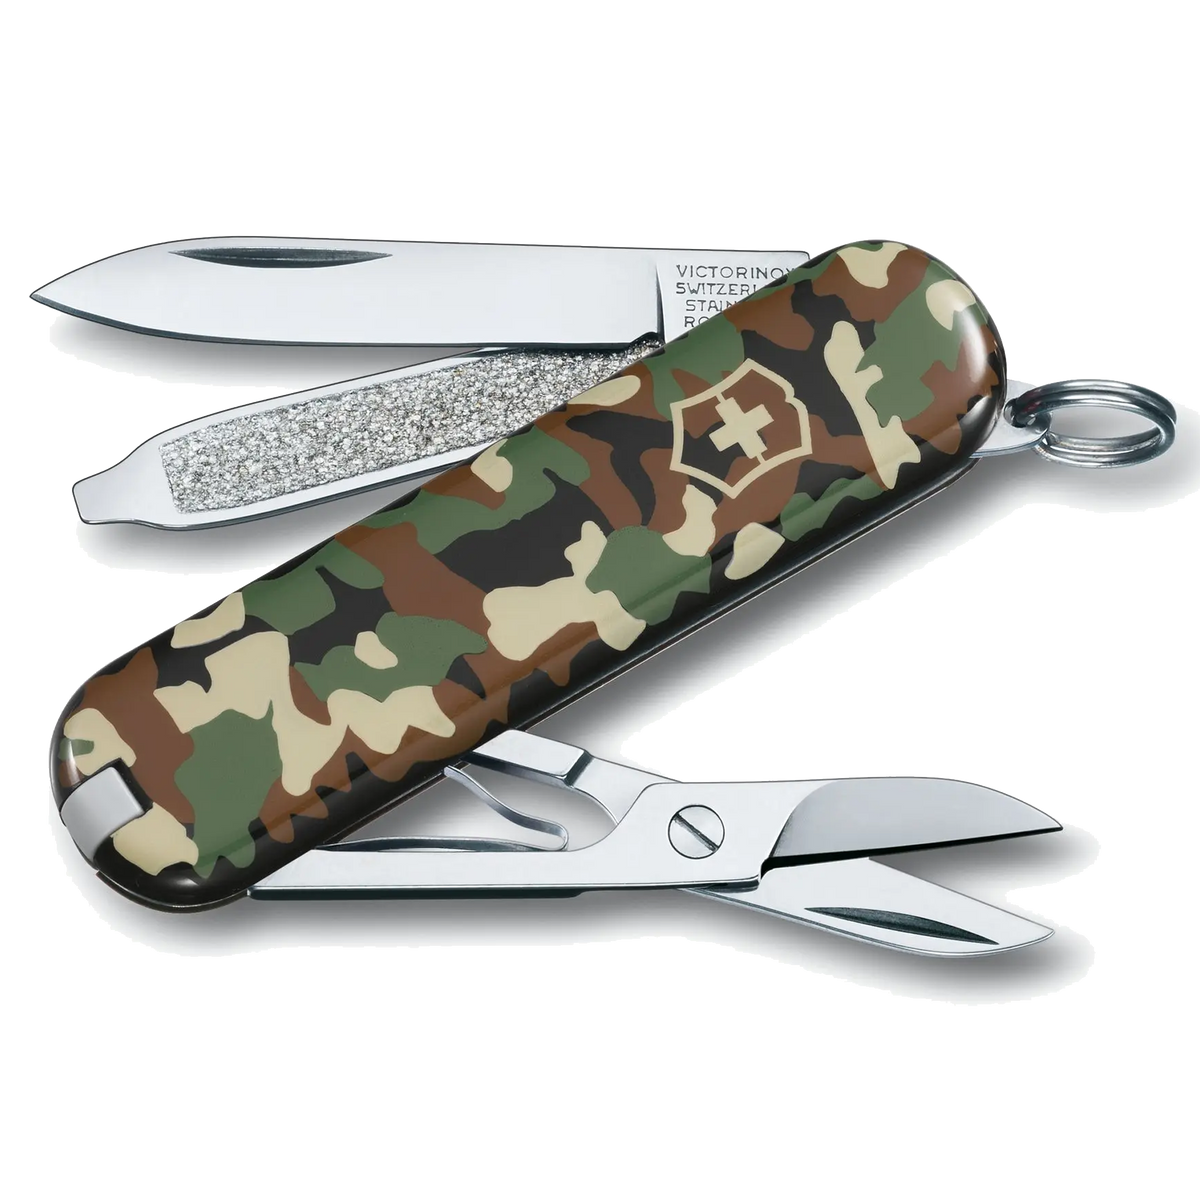 Victorinox - Small Swiss Army Knife - Camo